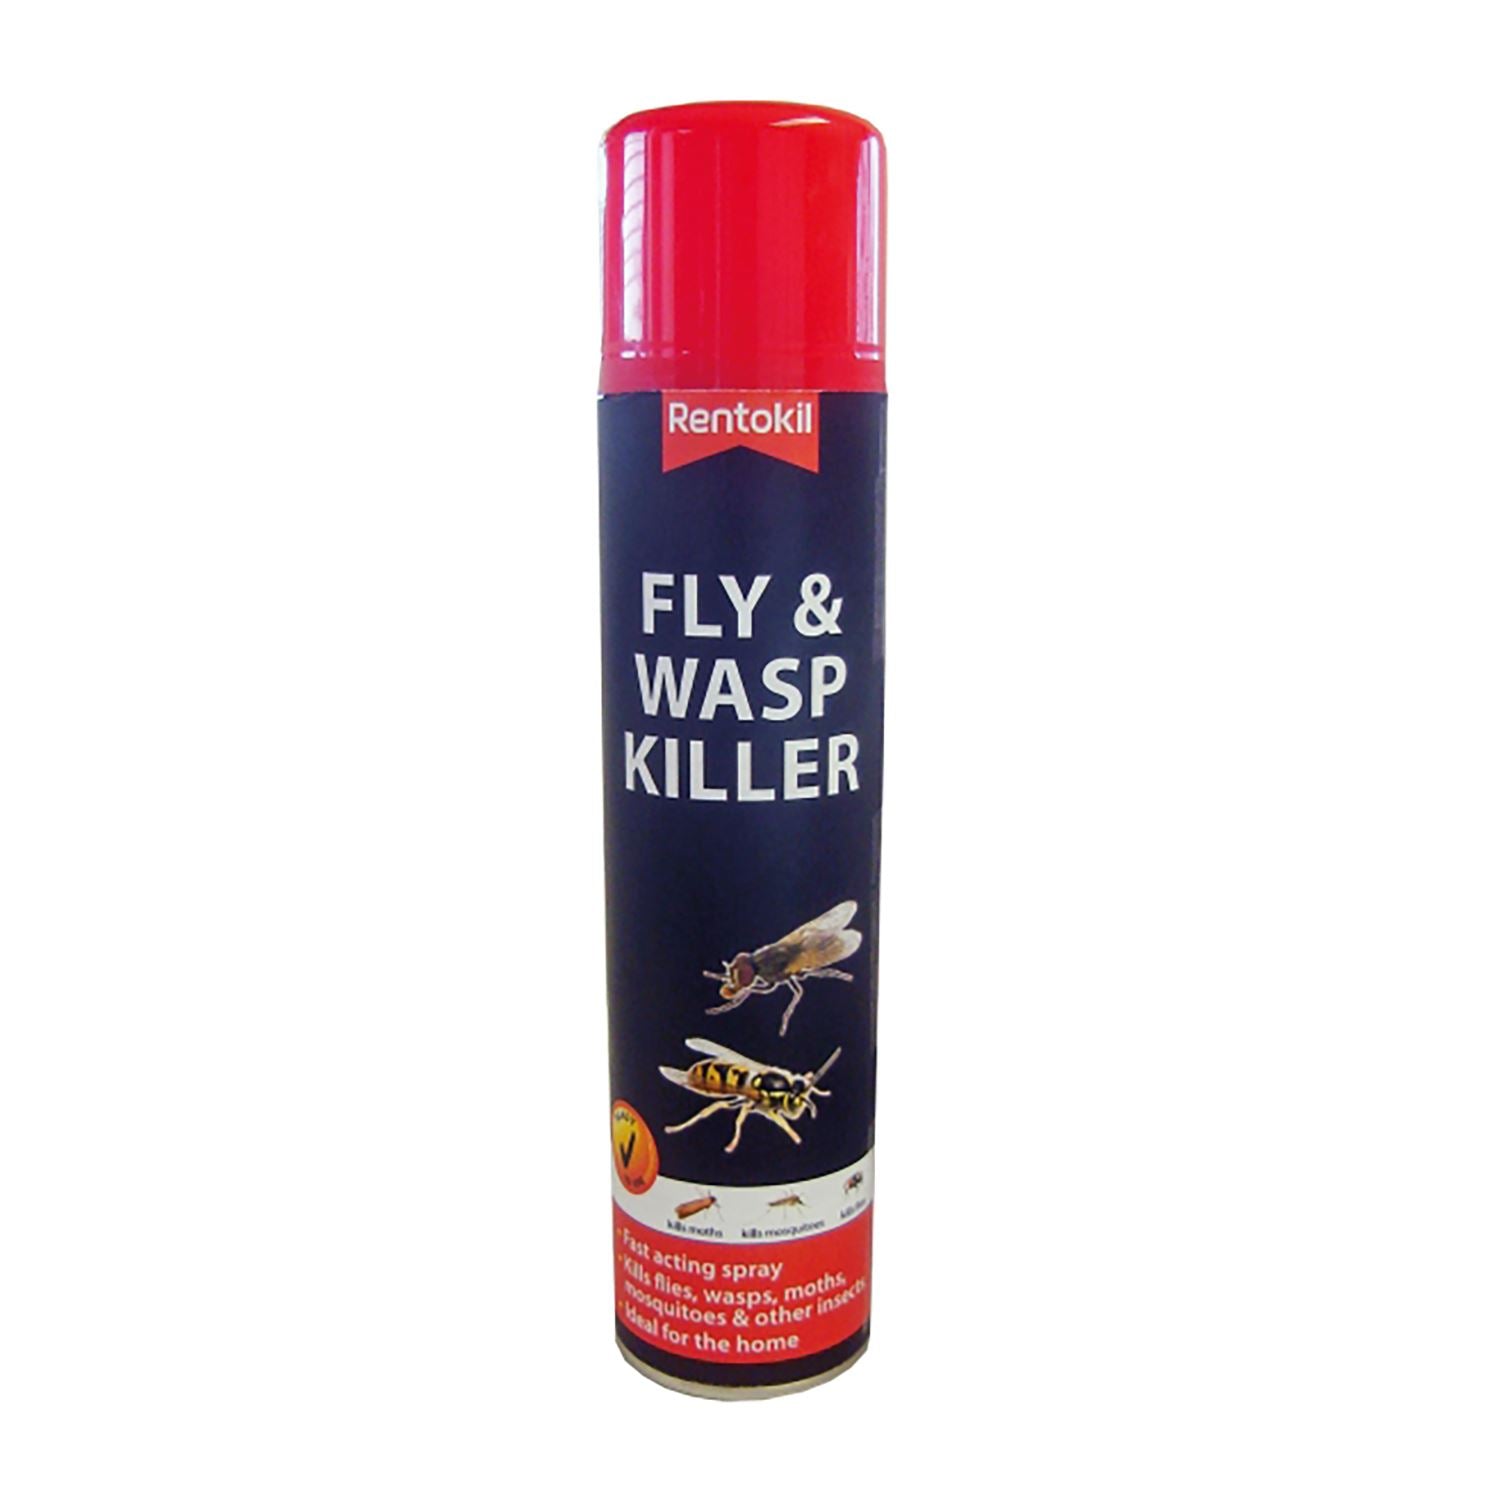 Rentokil Fly & Wasp Killer Spray - Just Horse Riders